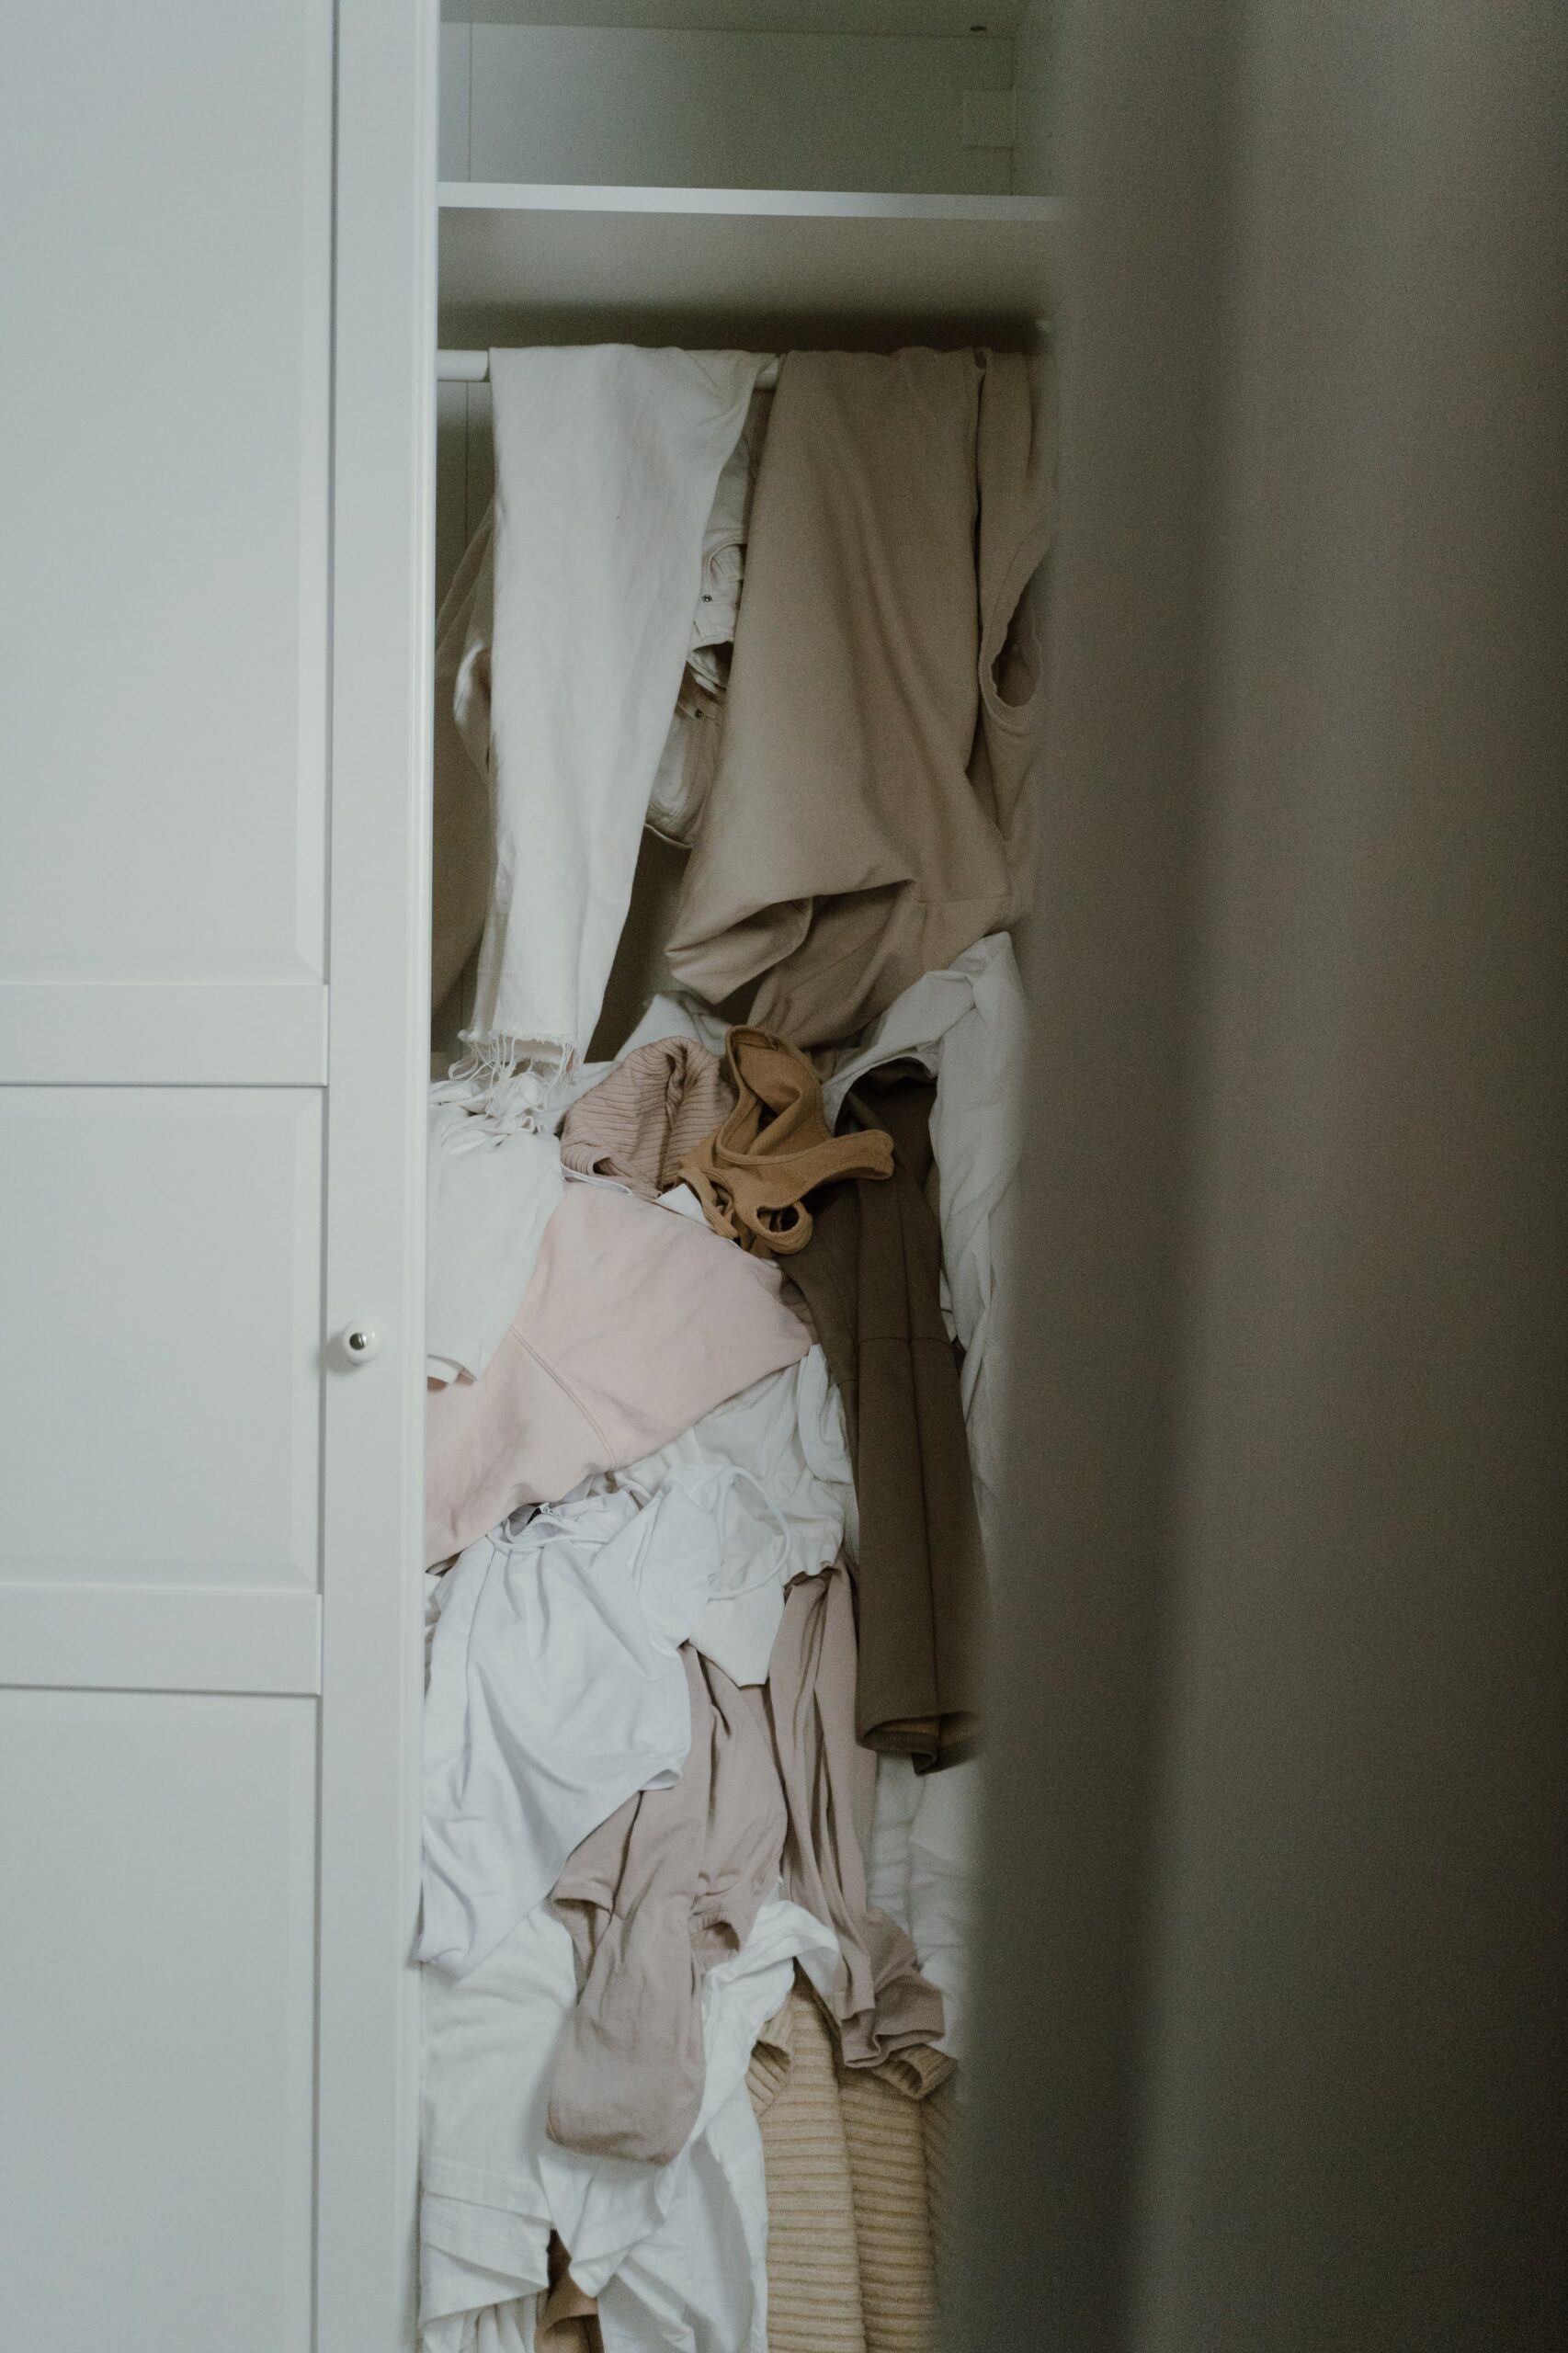 Messy closet